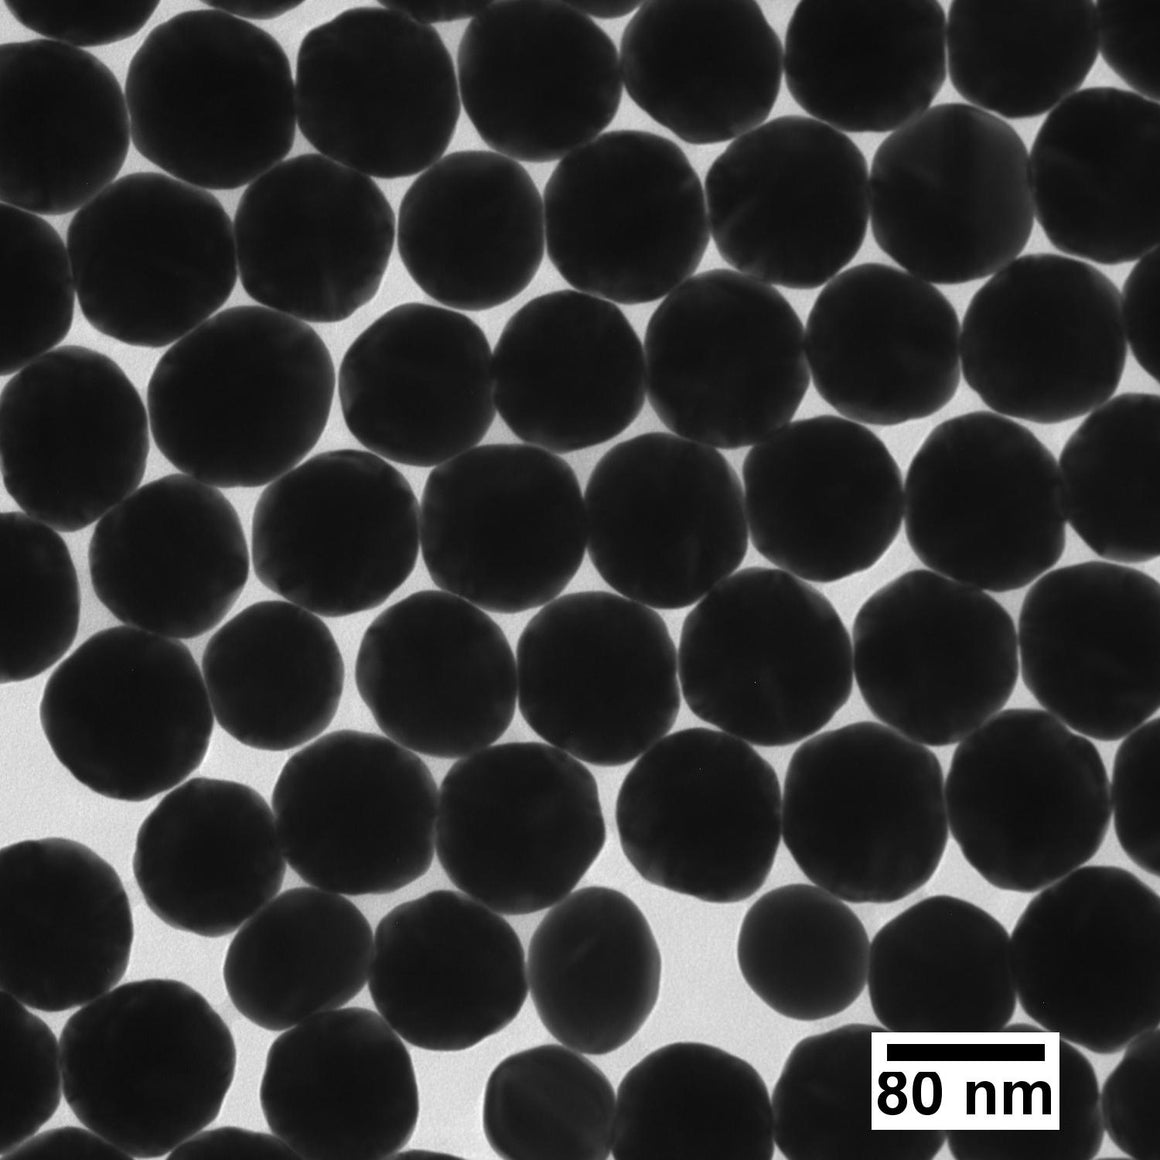 BioReady Gold Nanospheres – Carboxyl